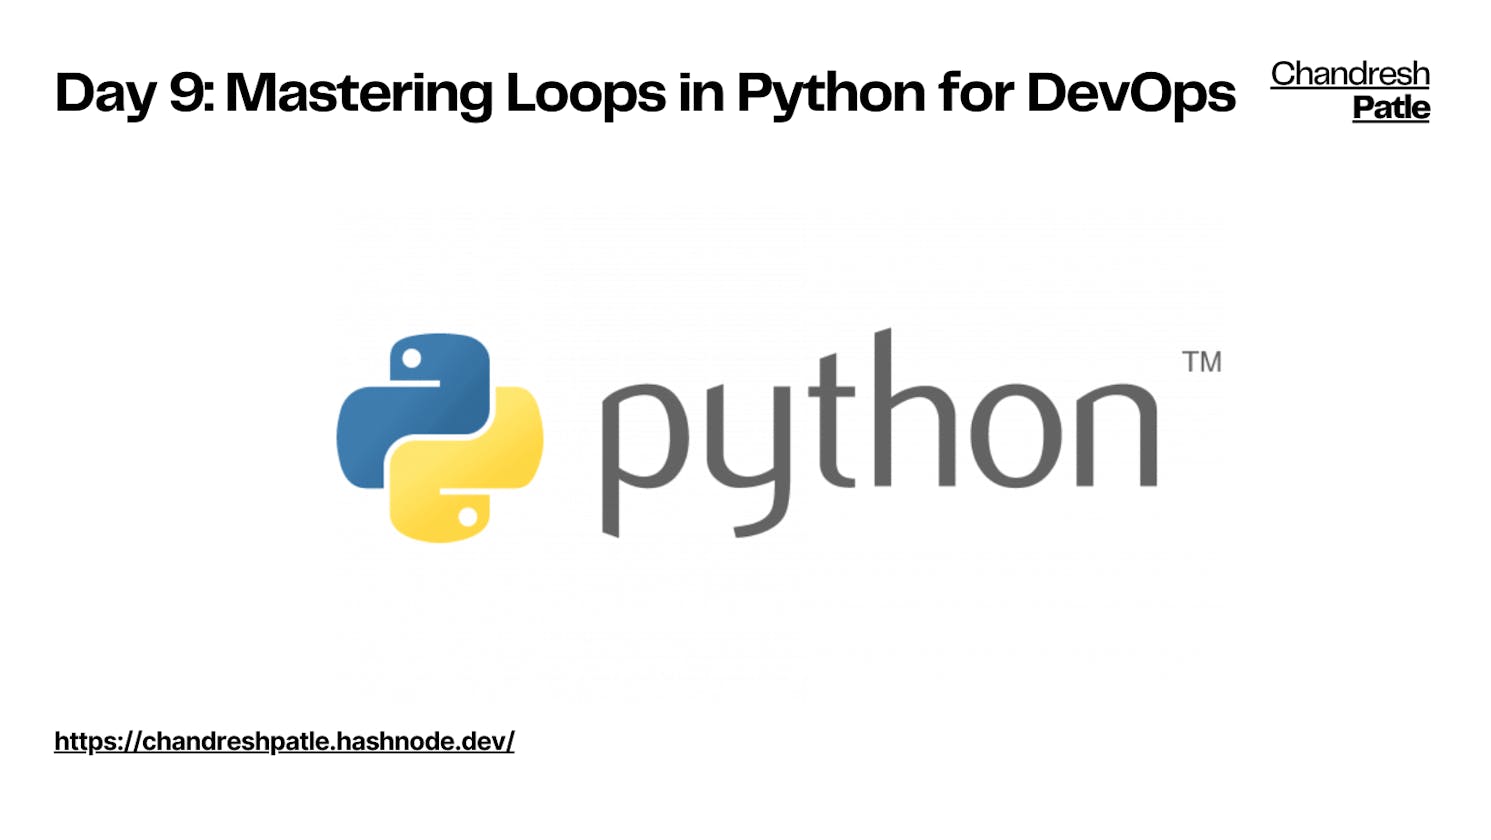 Day 9: Mastering Loops in Python for DevOps